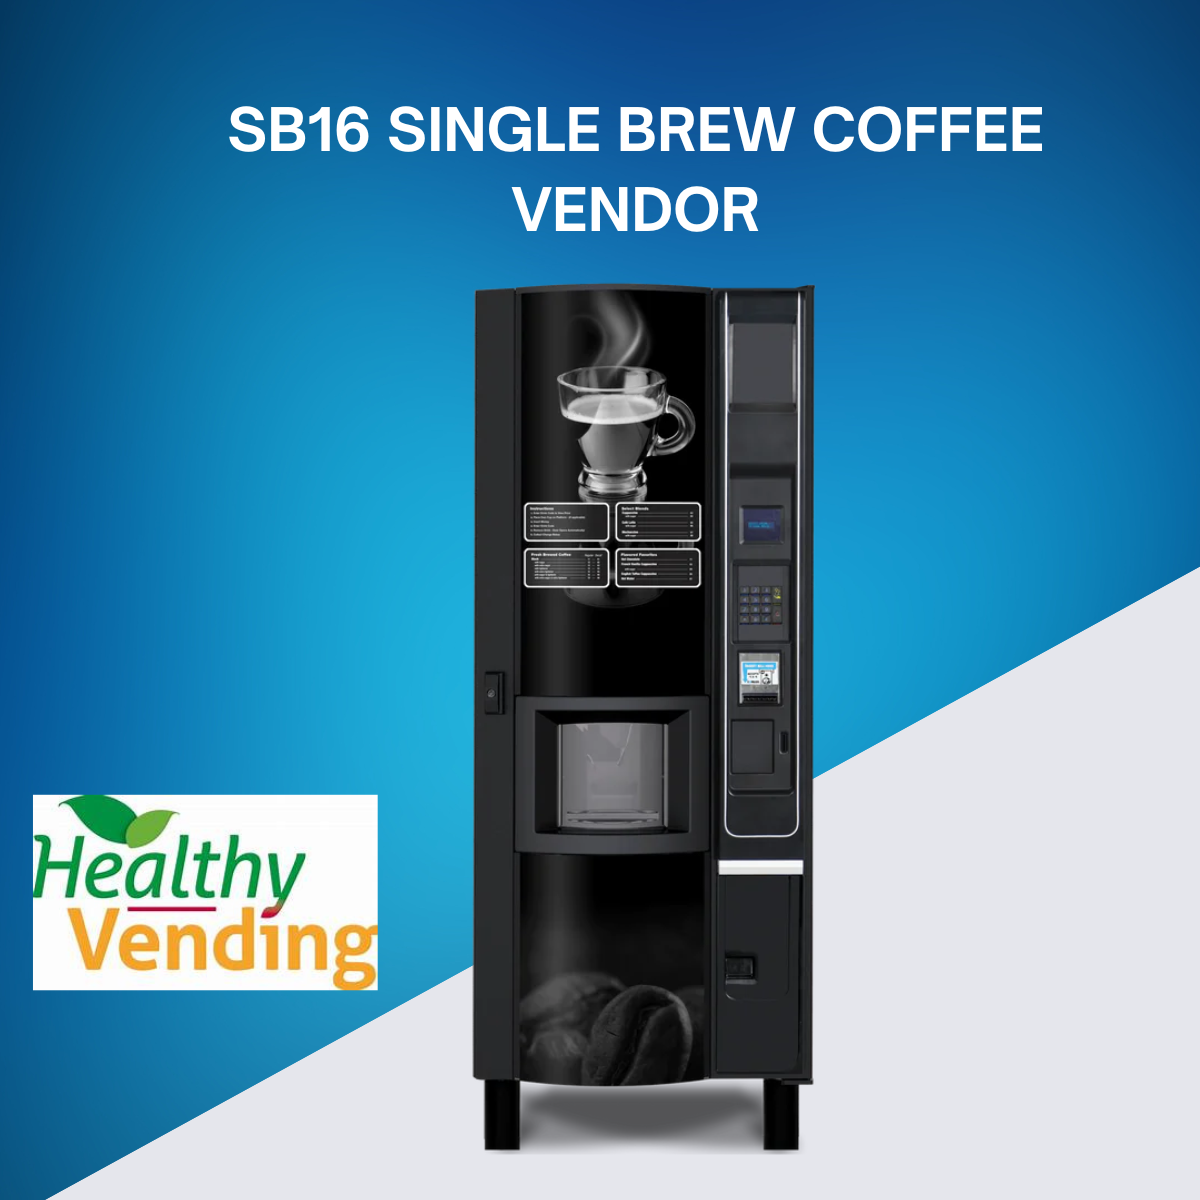 SB16 SINGLE BREW COFFEE VENDOR